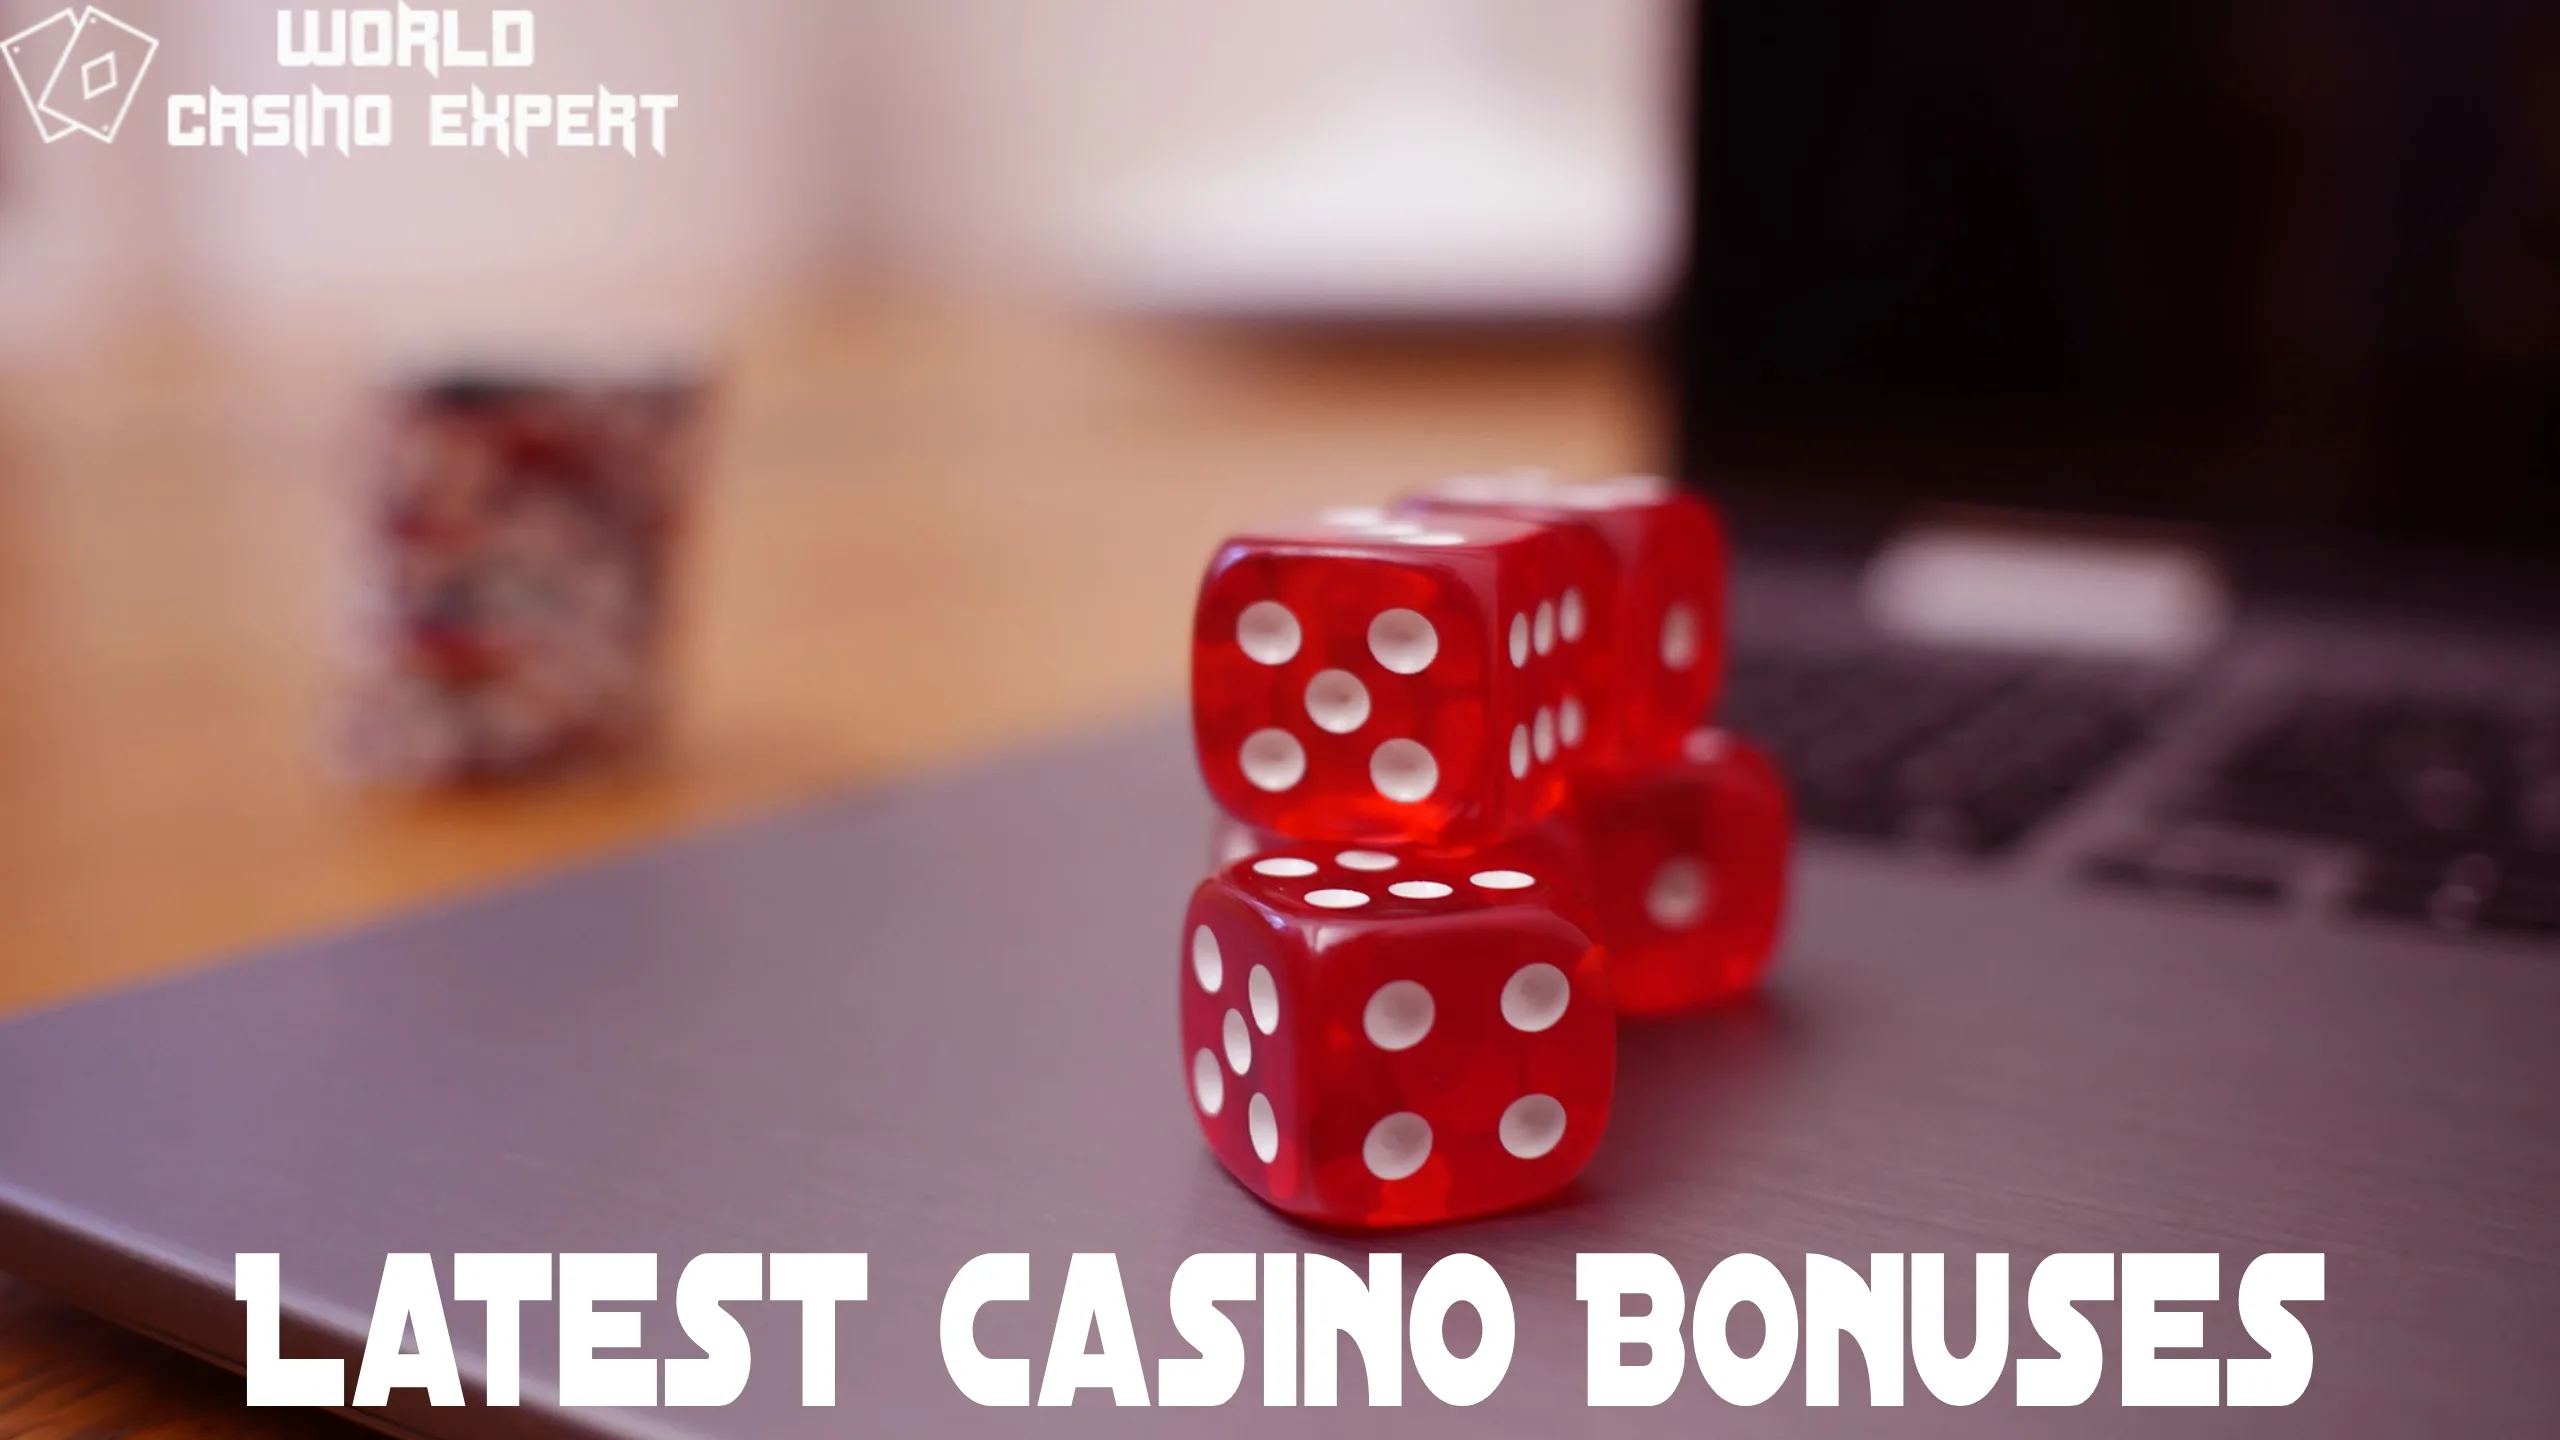 Top Latest Casino Bonuses from World Casino Expert